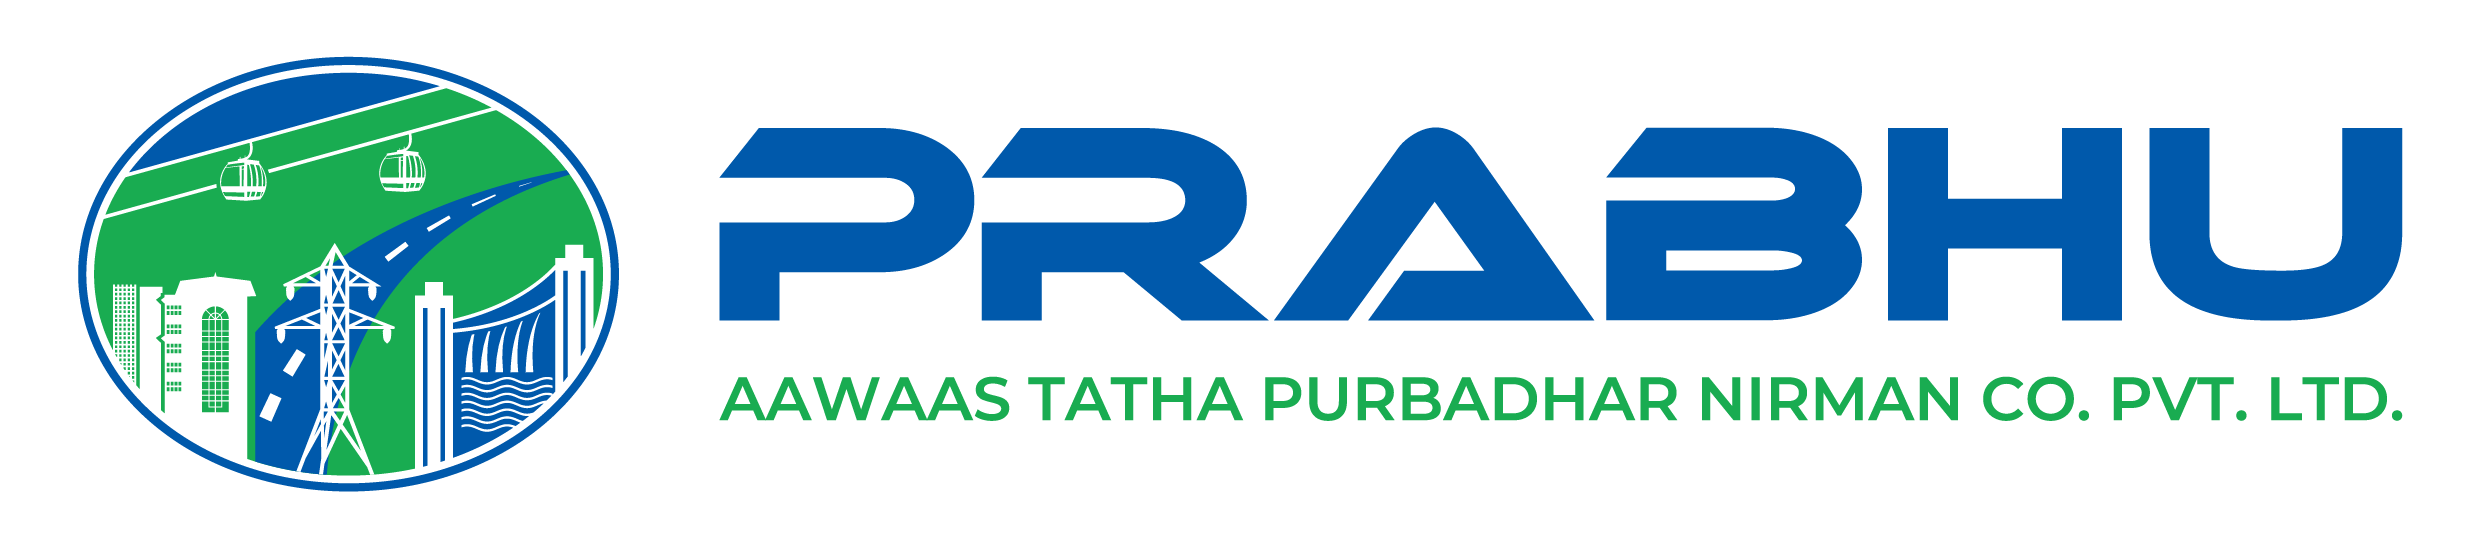 Prabhu Aawaas tatha Purbadhar Nirman Company Pvt Ltd final logo-01